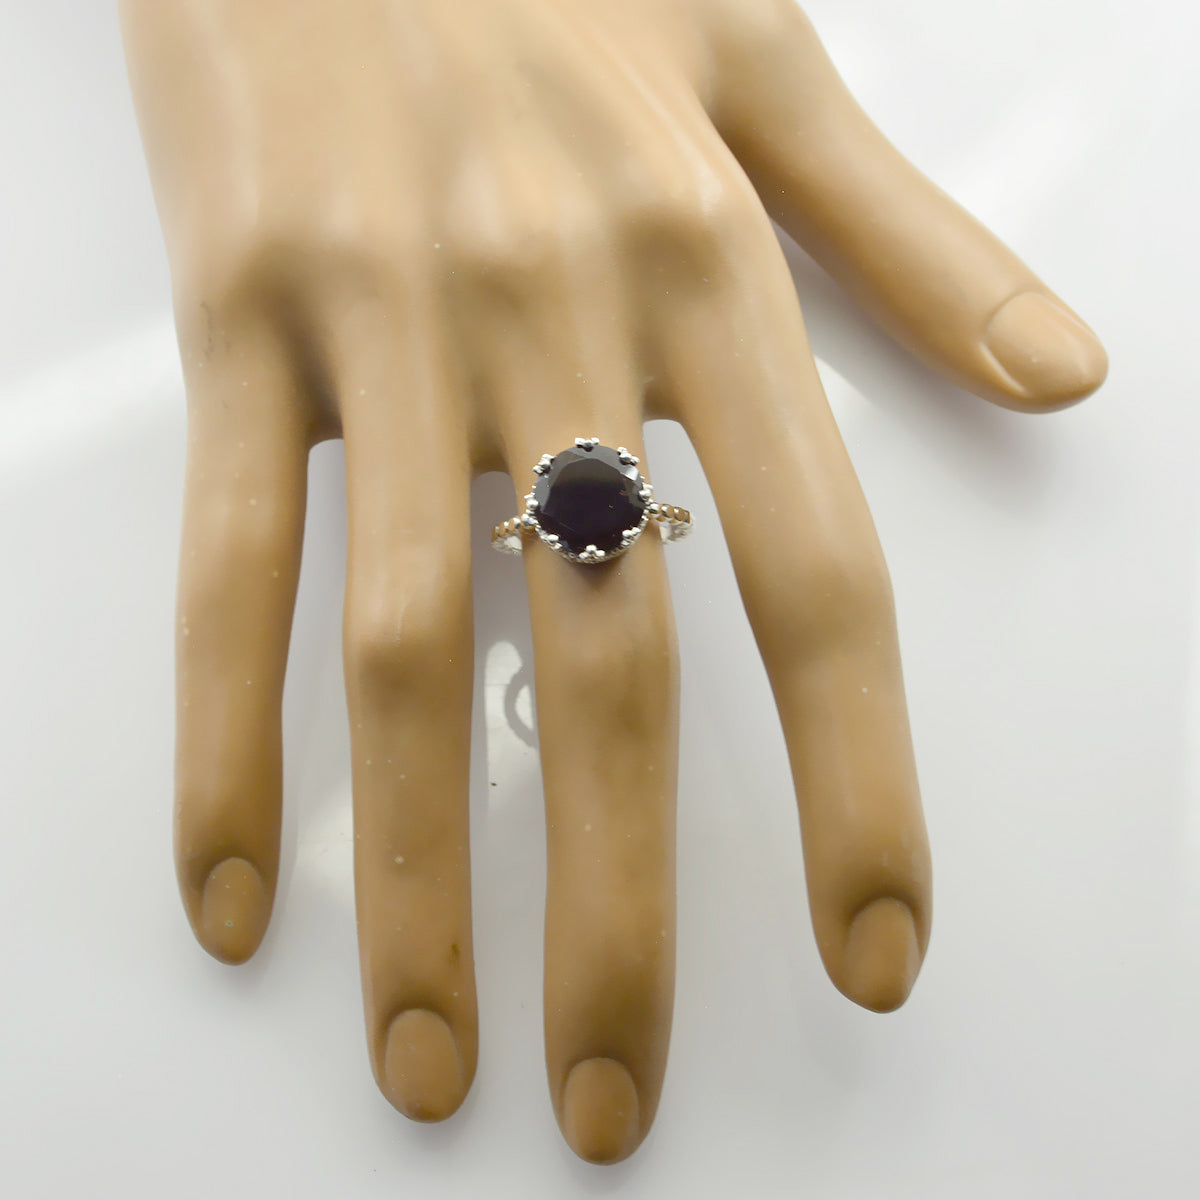 Riyo Dollish Gemstones Garnet Sterling Silver Rings Bone Jewelry